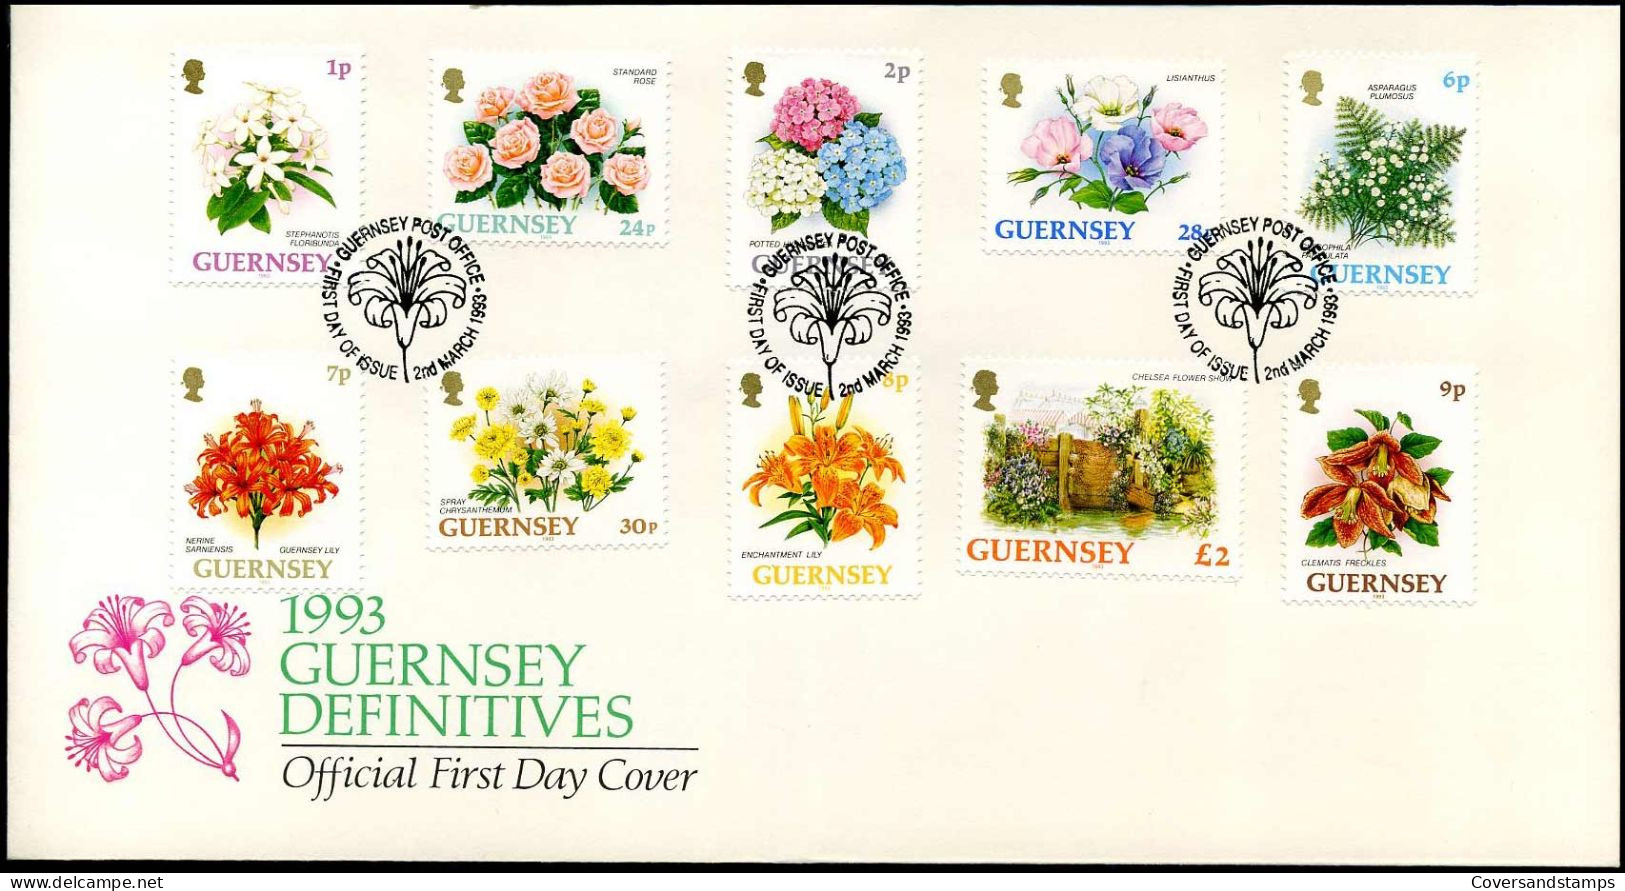 FDC - Definitives 1993 - Guernsey